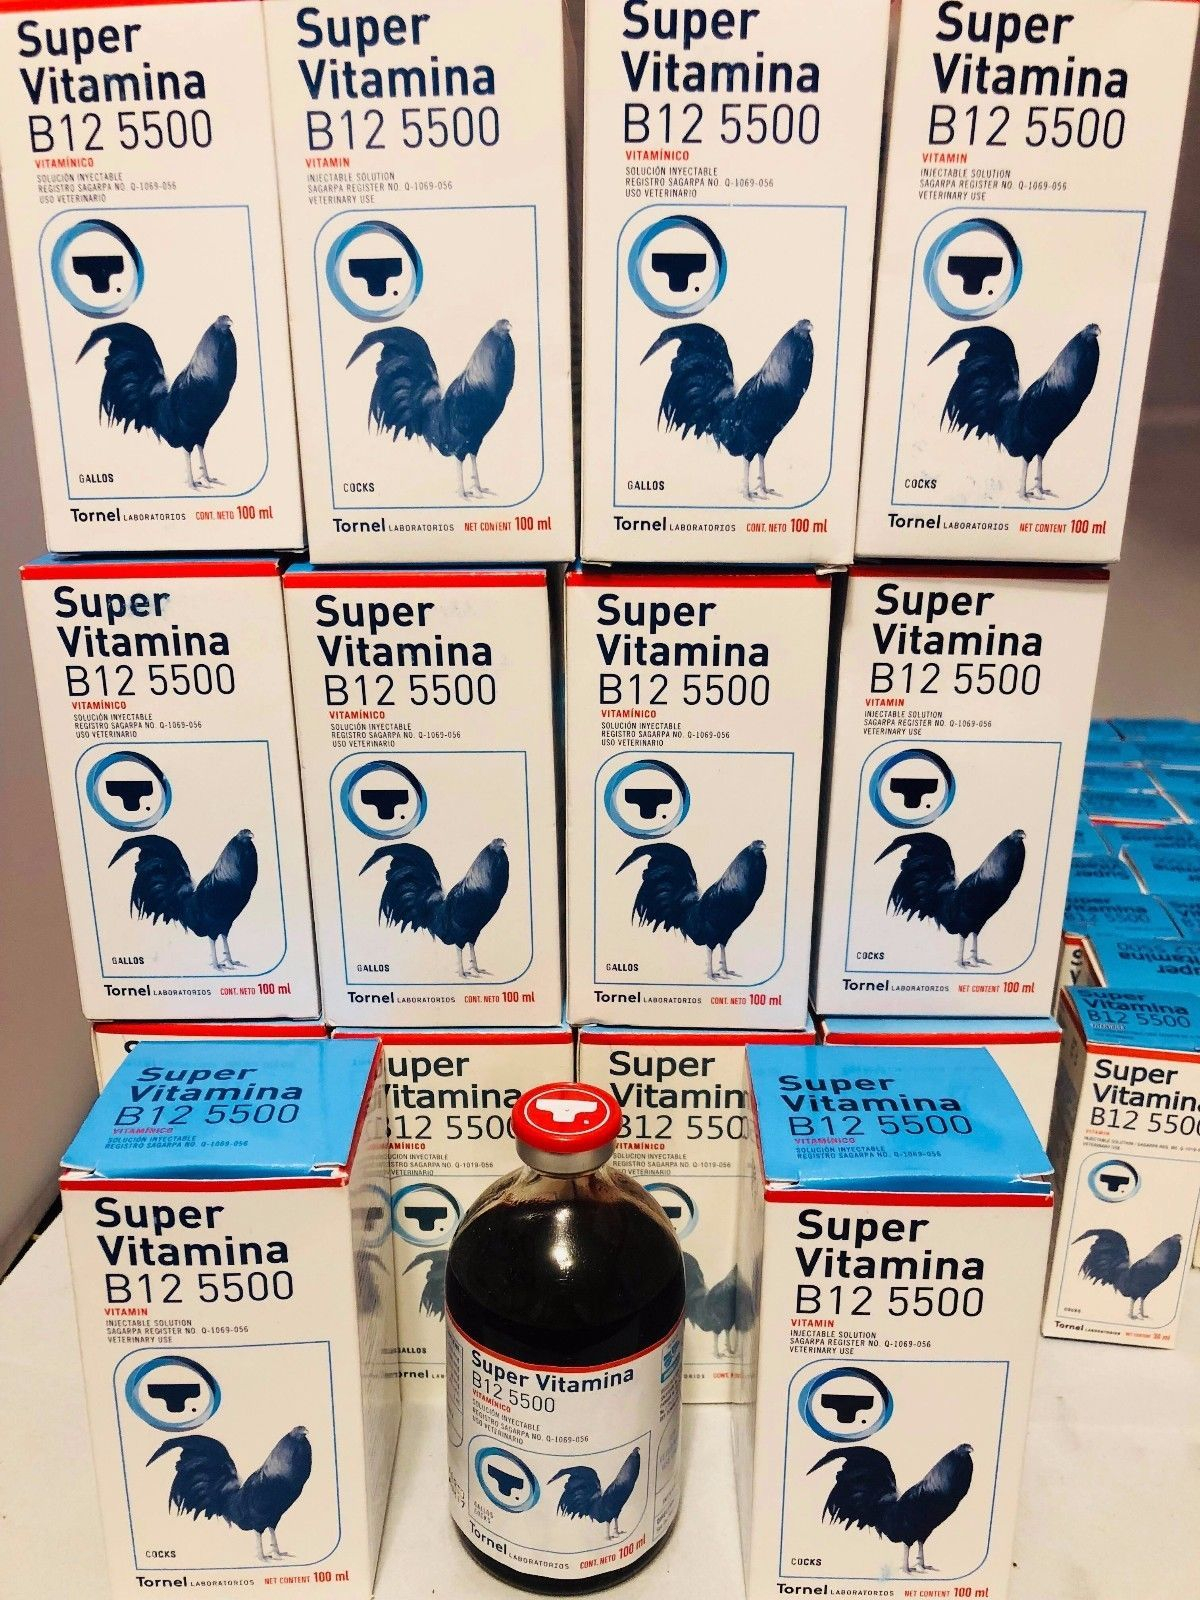 Super Vitamina Tornel B12 5500 100Ml Bottle Gallos Gamefowl for Lunar Calendar Cockfighting 2020